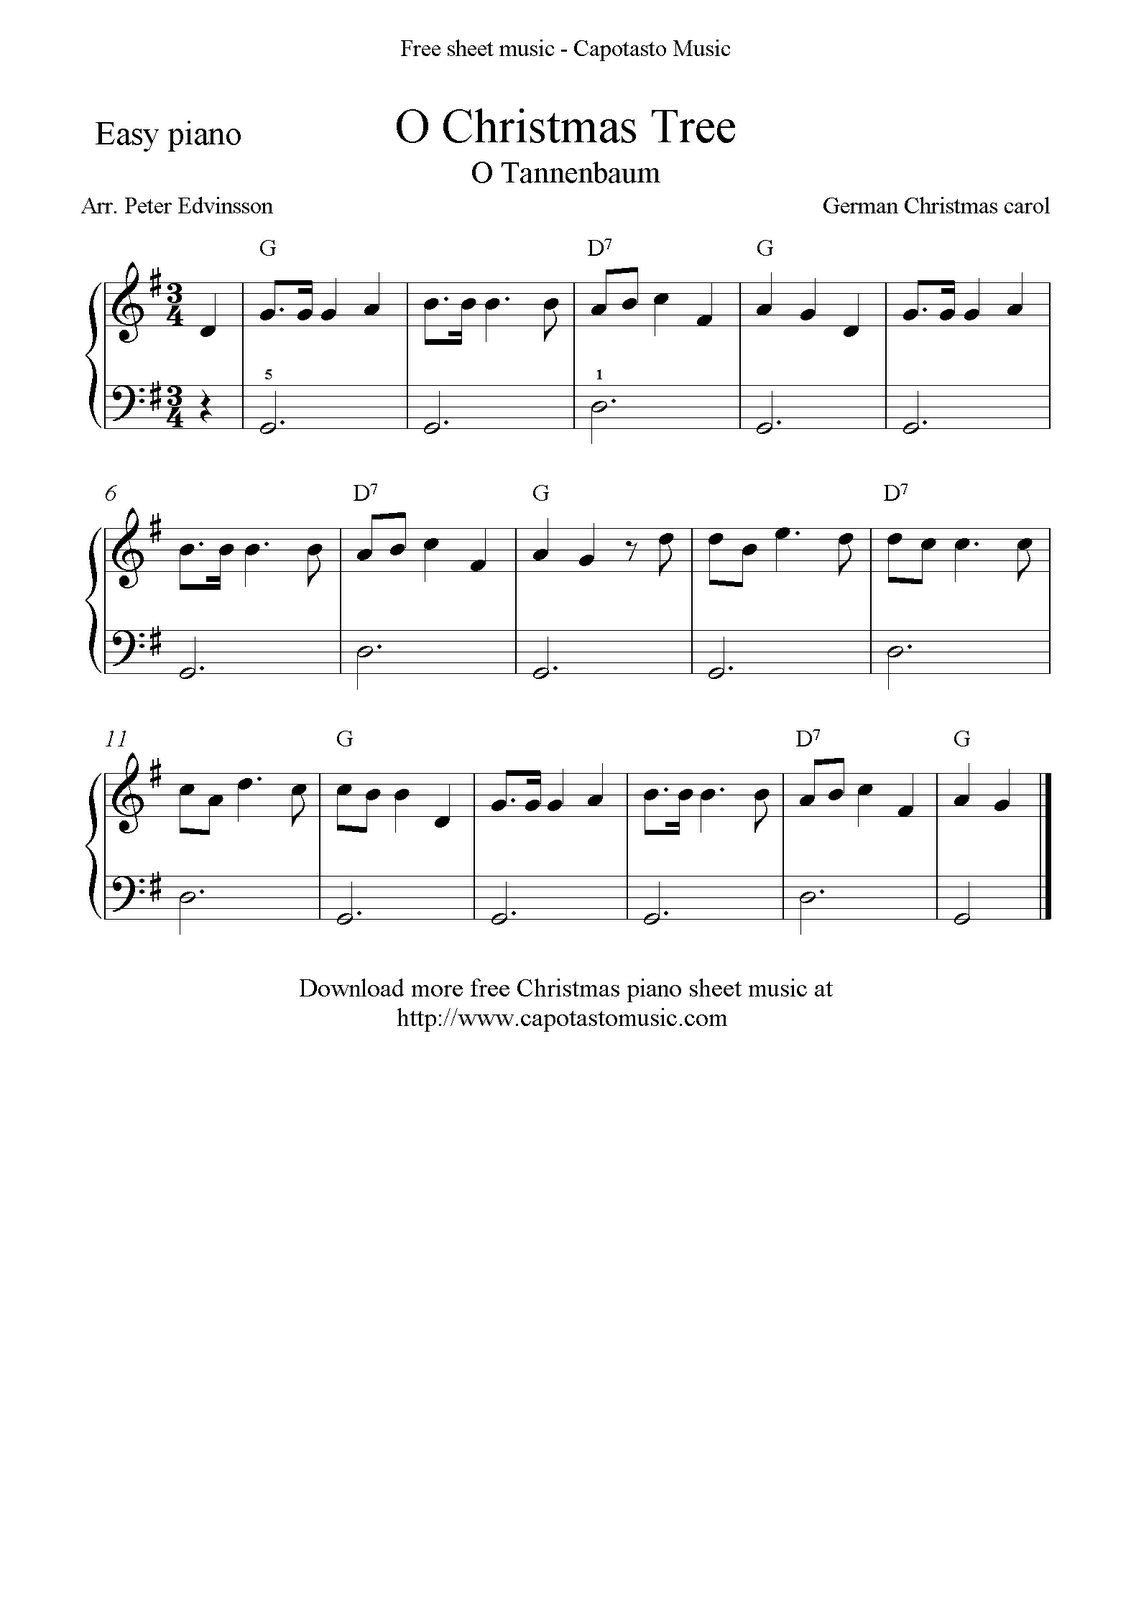 Free Christmas Sheet Music For Easy Piano Solo, O Christmas Tree - Christmas Piano Sheet Music Easy Free Printable